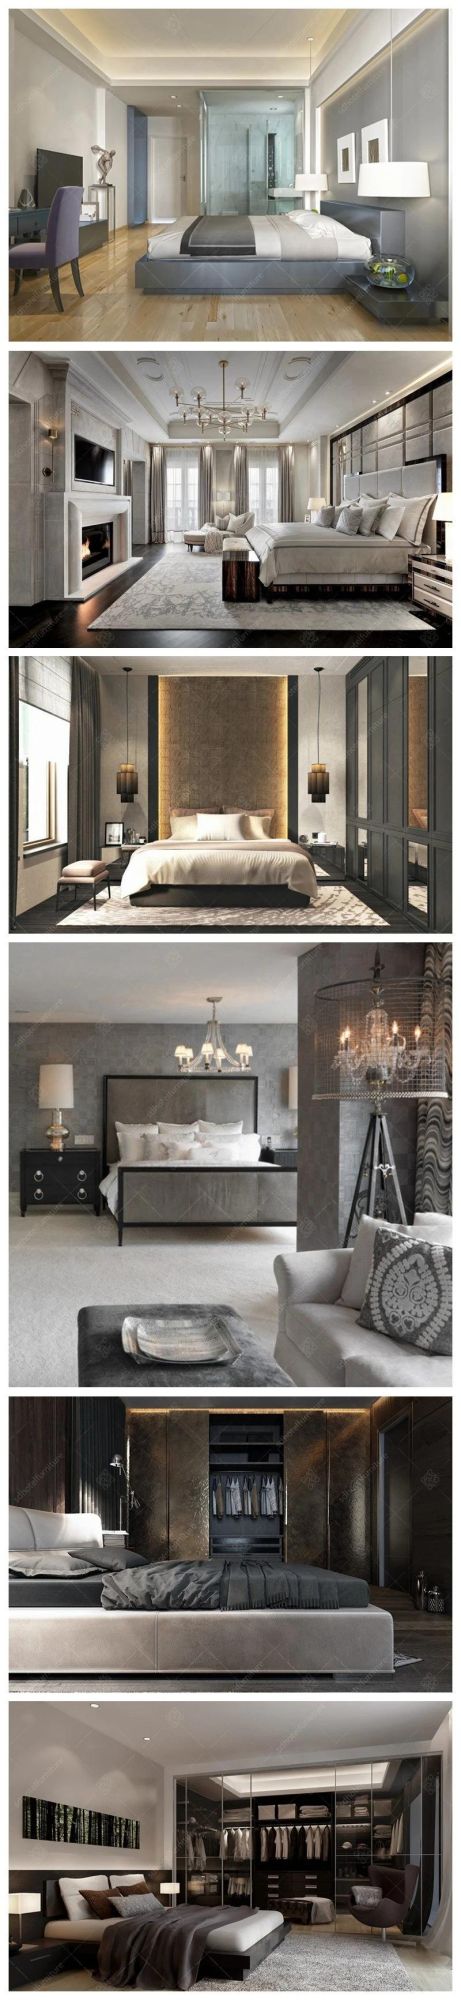 Elegant Design Concise Style Hotel Apartment Bedroom Furniture Sets for Sale